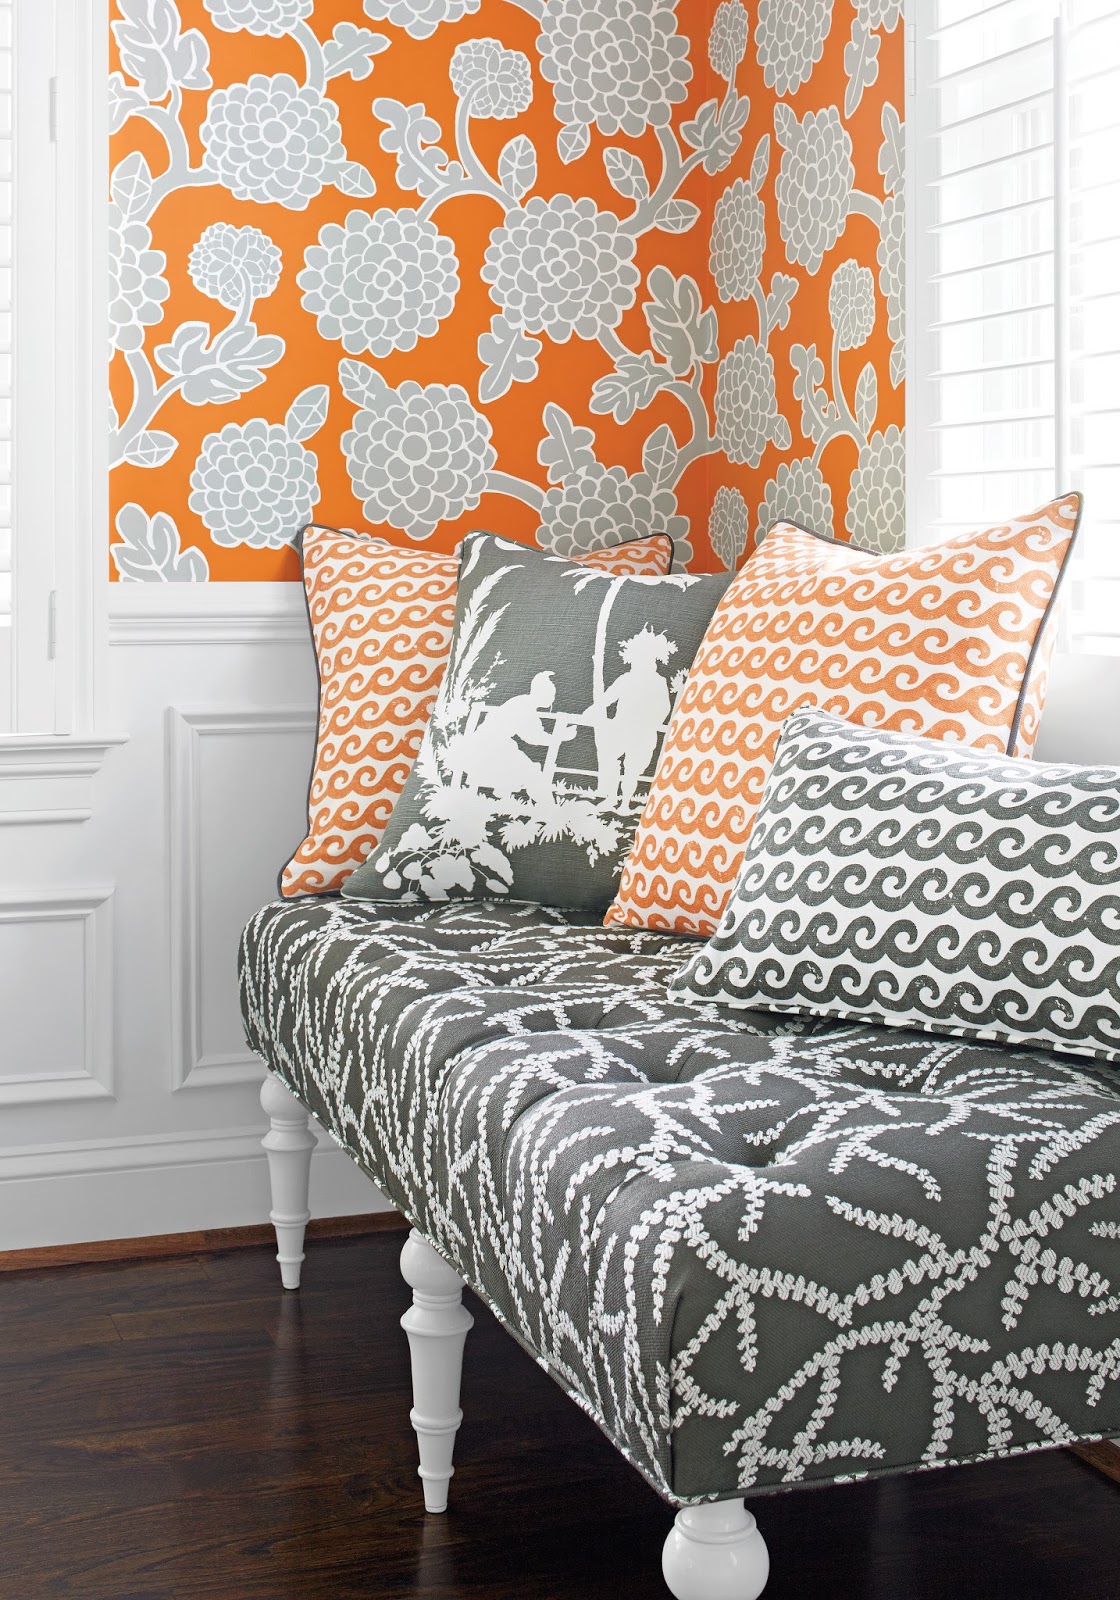 Wallpaper: Nikko in Tangerine and Grey